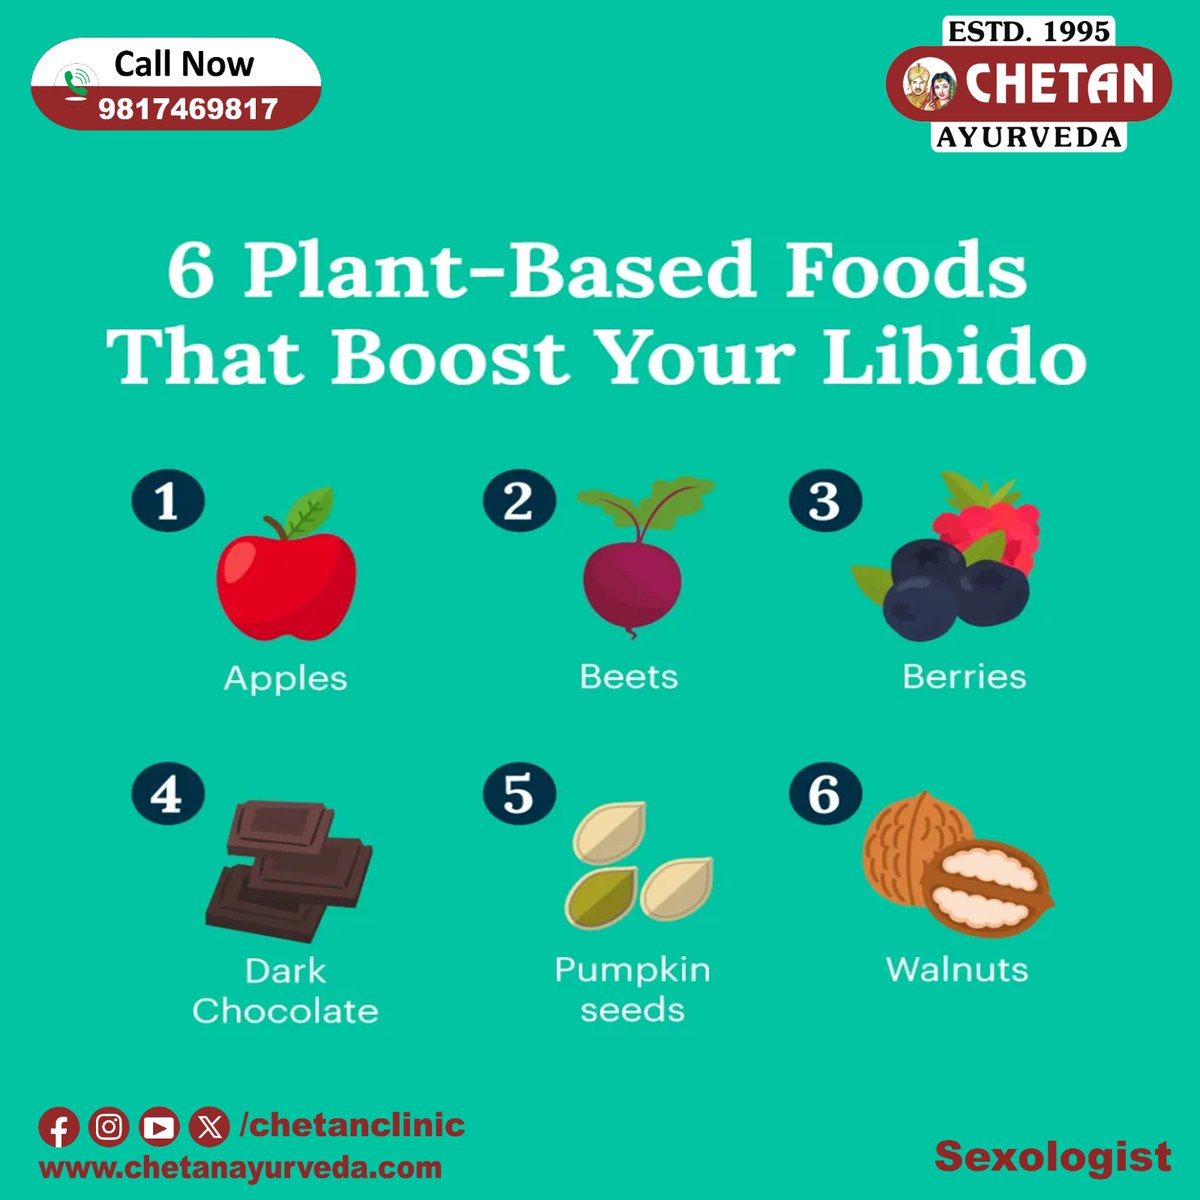 '6 Plant-Based foods that Boost Your Libido.
WhatsApp No 098174 69817
जागरूक रहें, स्वस्थ रहें, मुस्कुराते रहें !!
#chetanclinic #Benefits #sexologist
#sexeducation #sextips